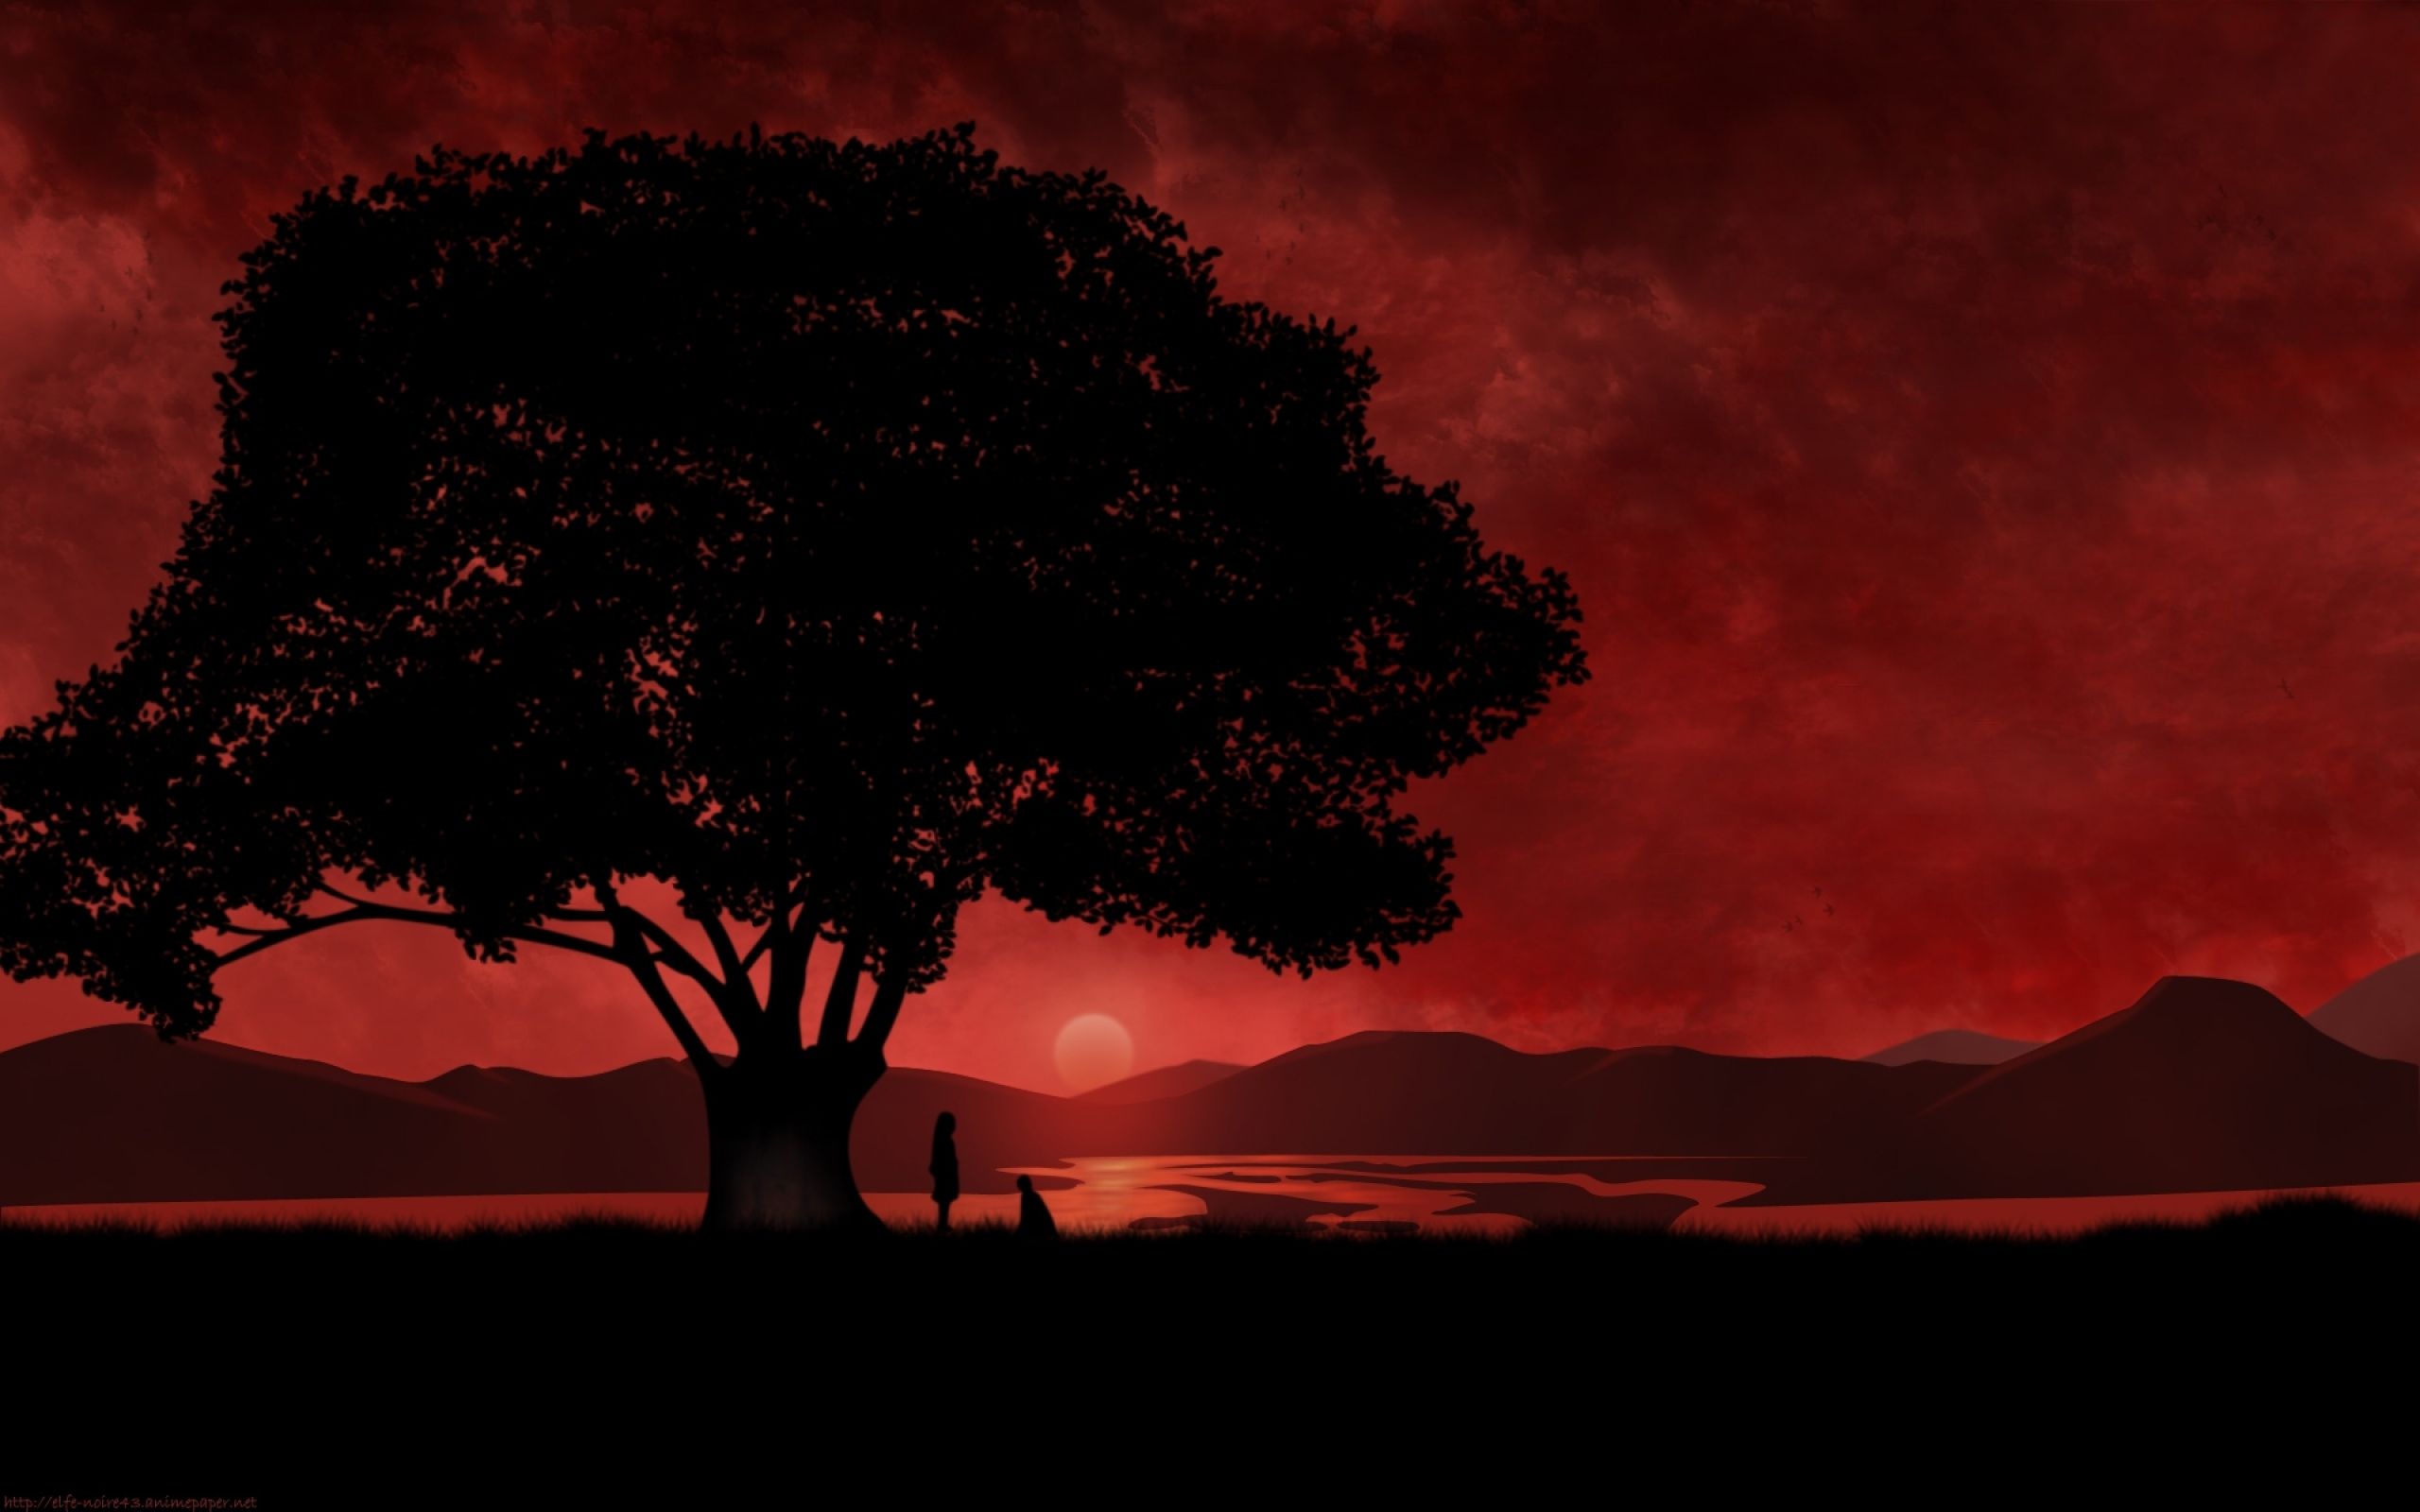 Anime Red Sunset & Tree wallpaper. Anime Red Sunset & Tree